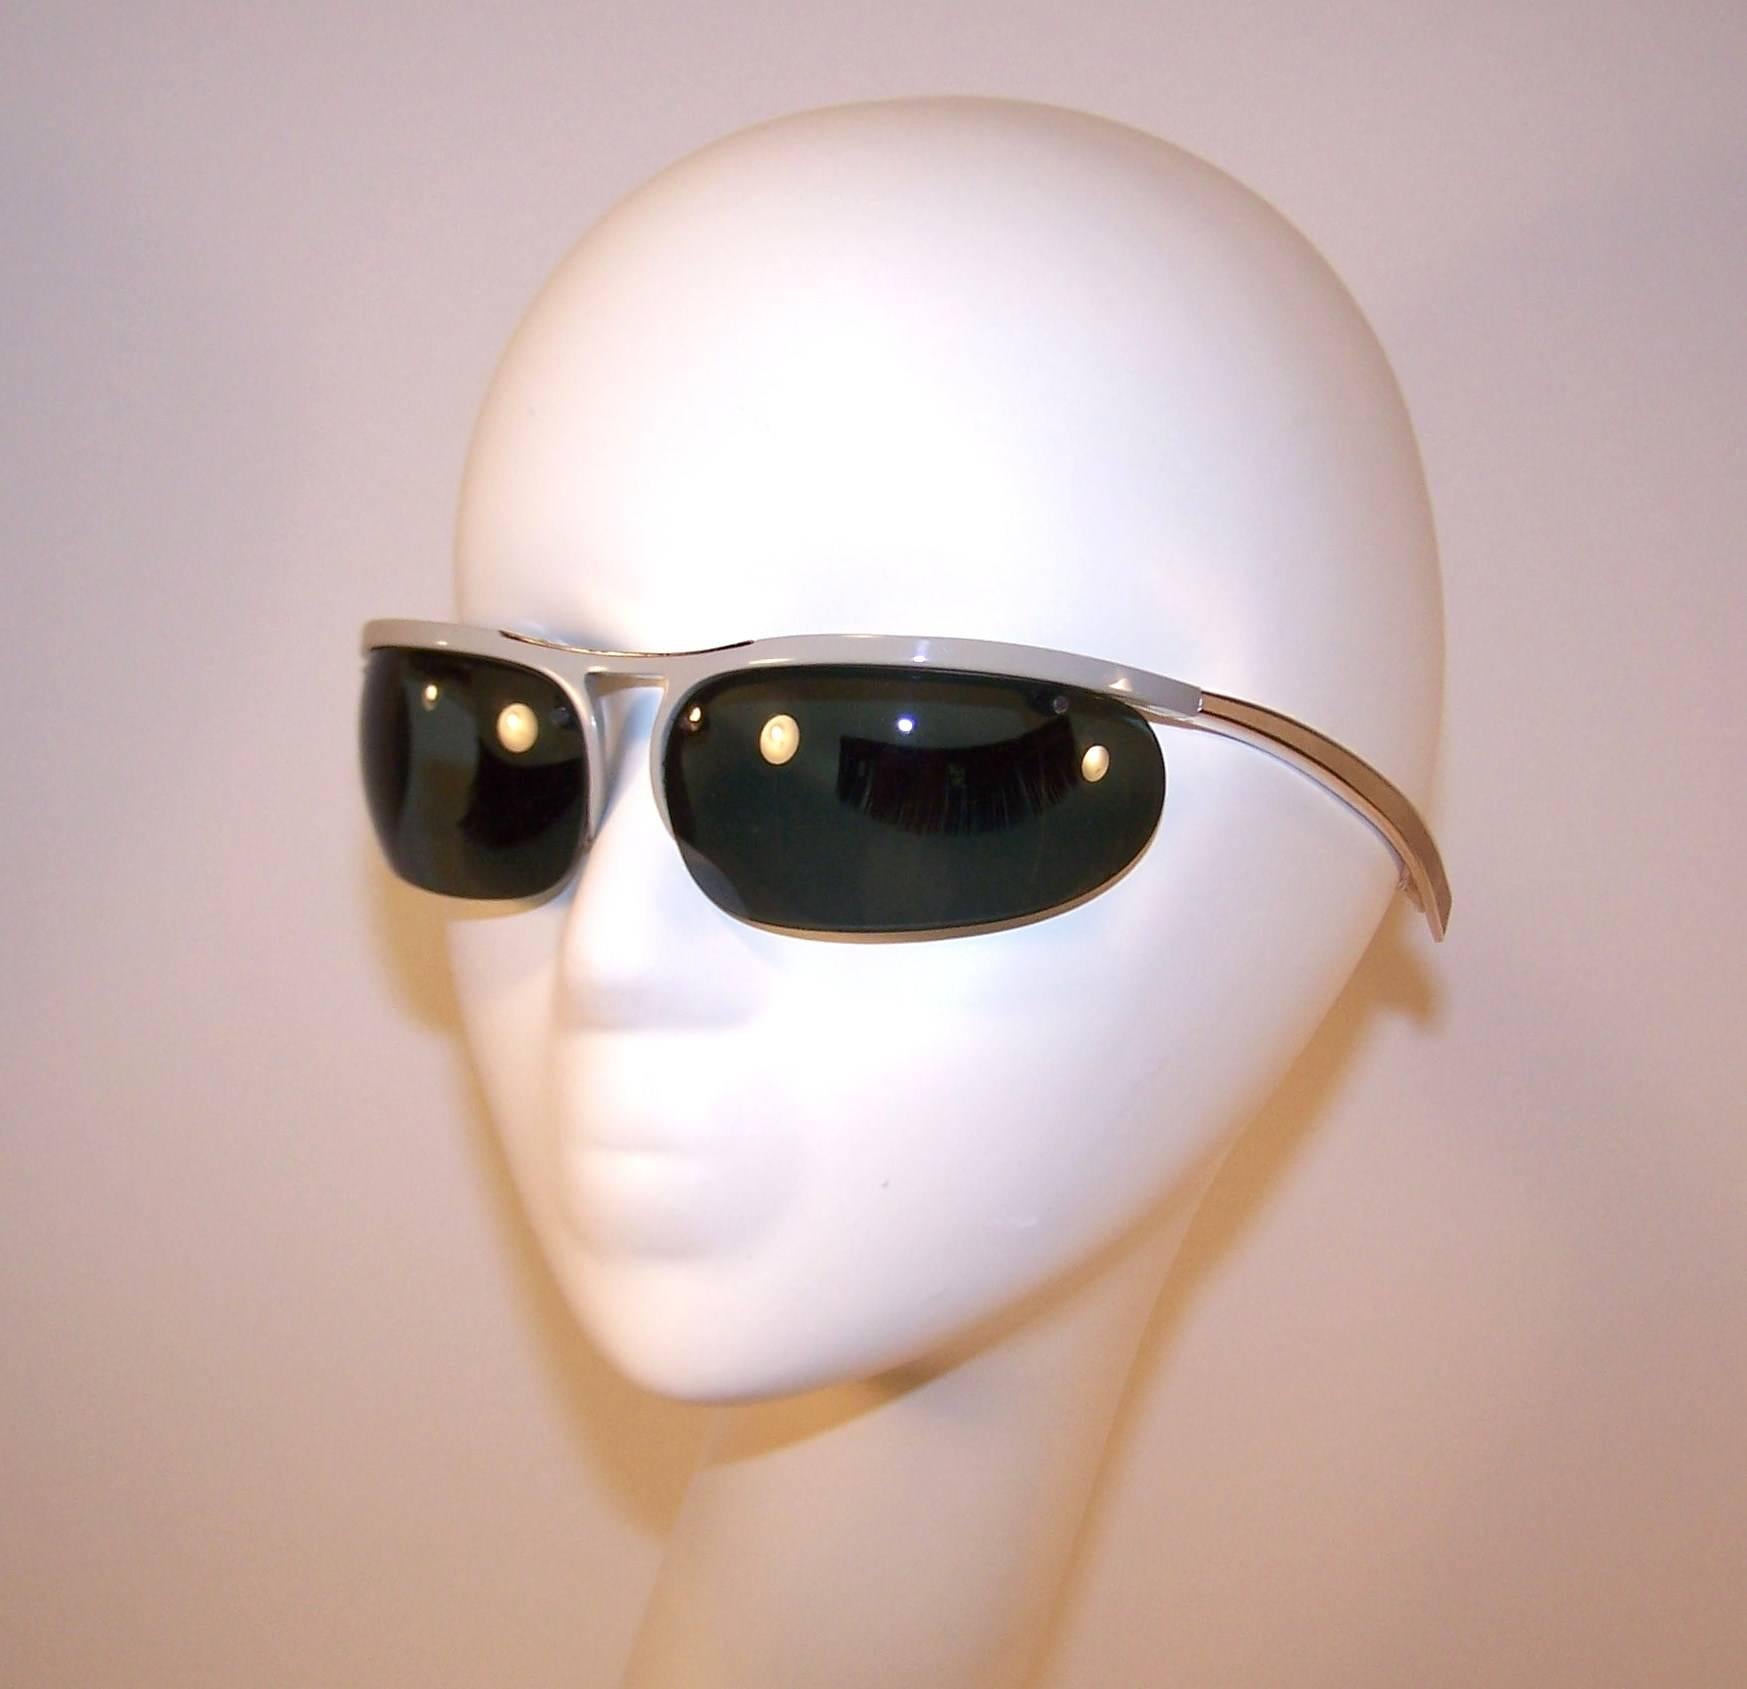 renauld sunglasses